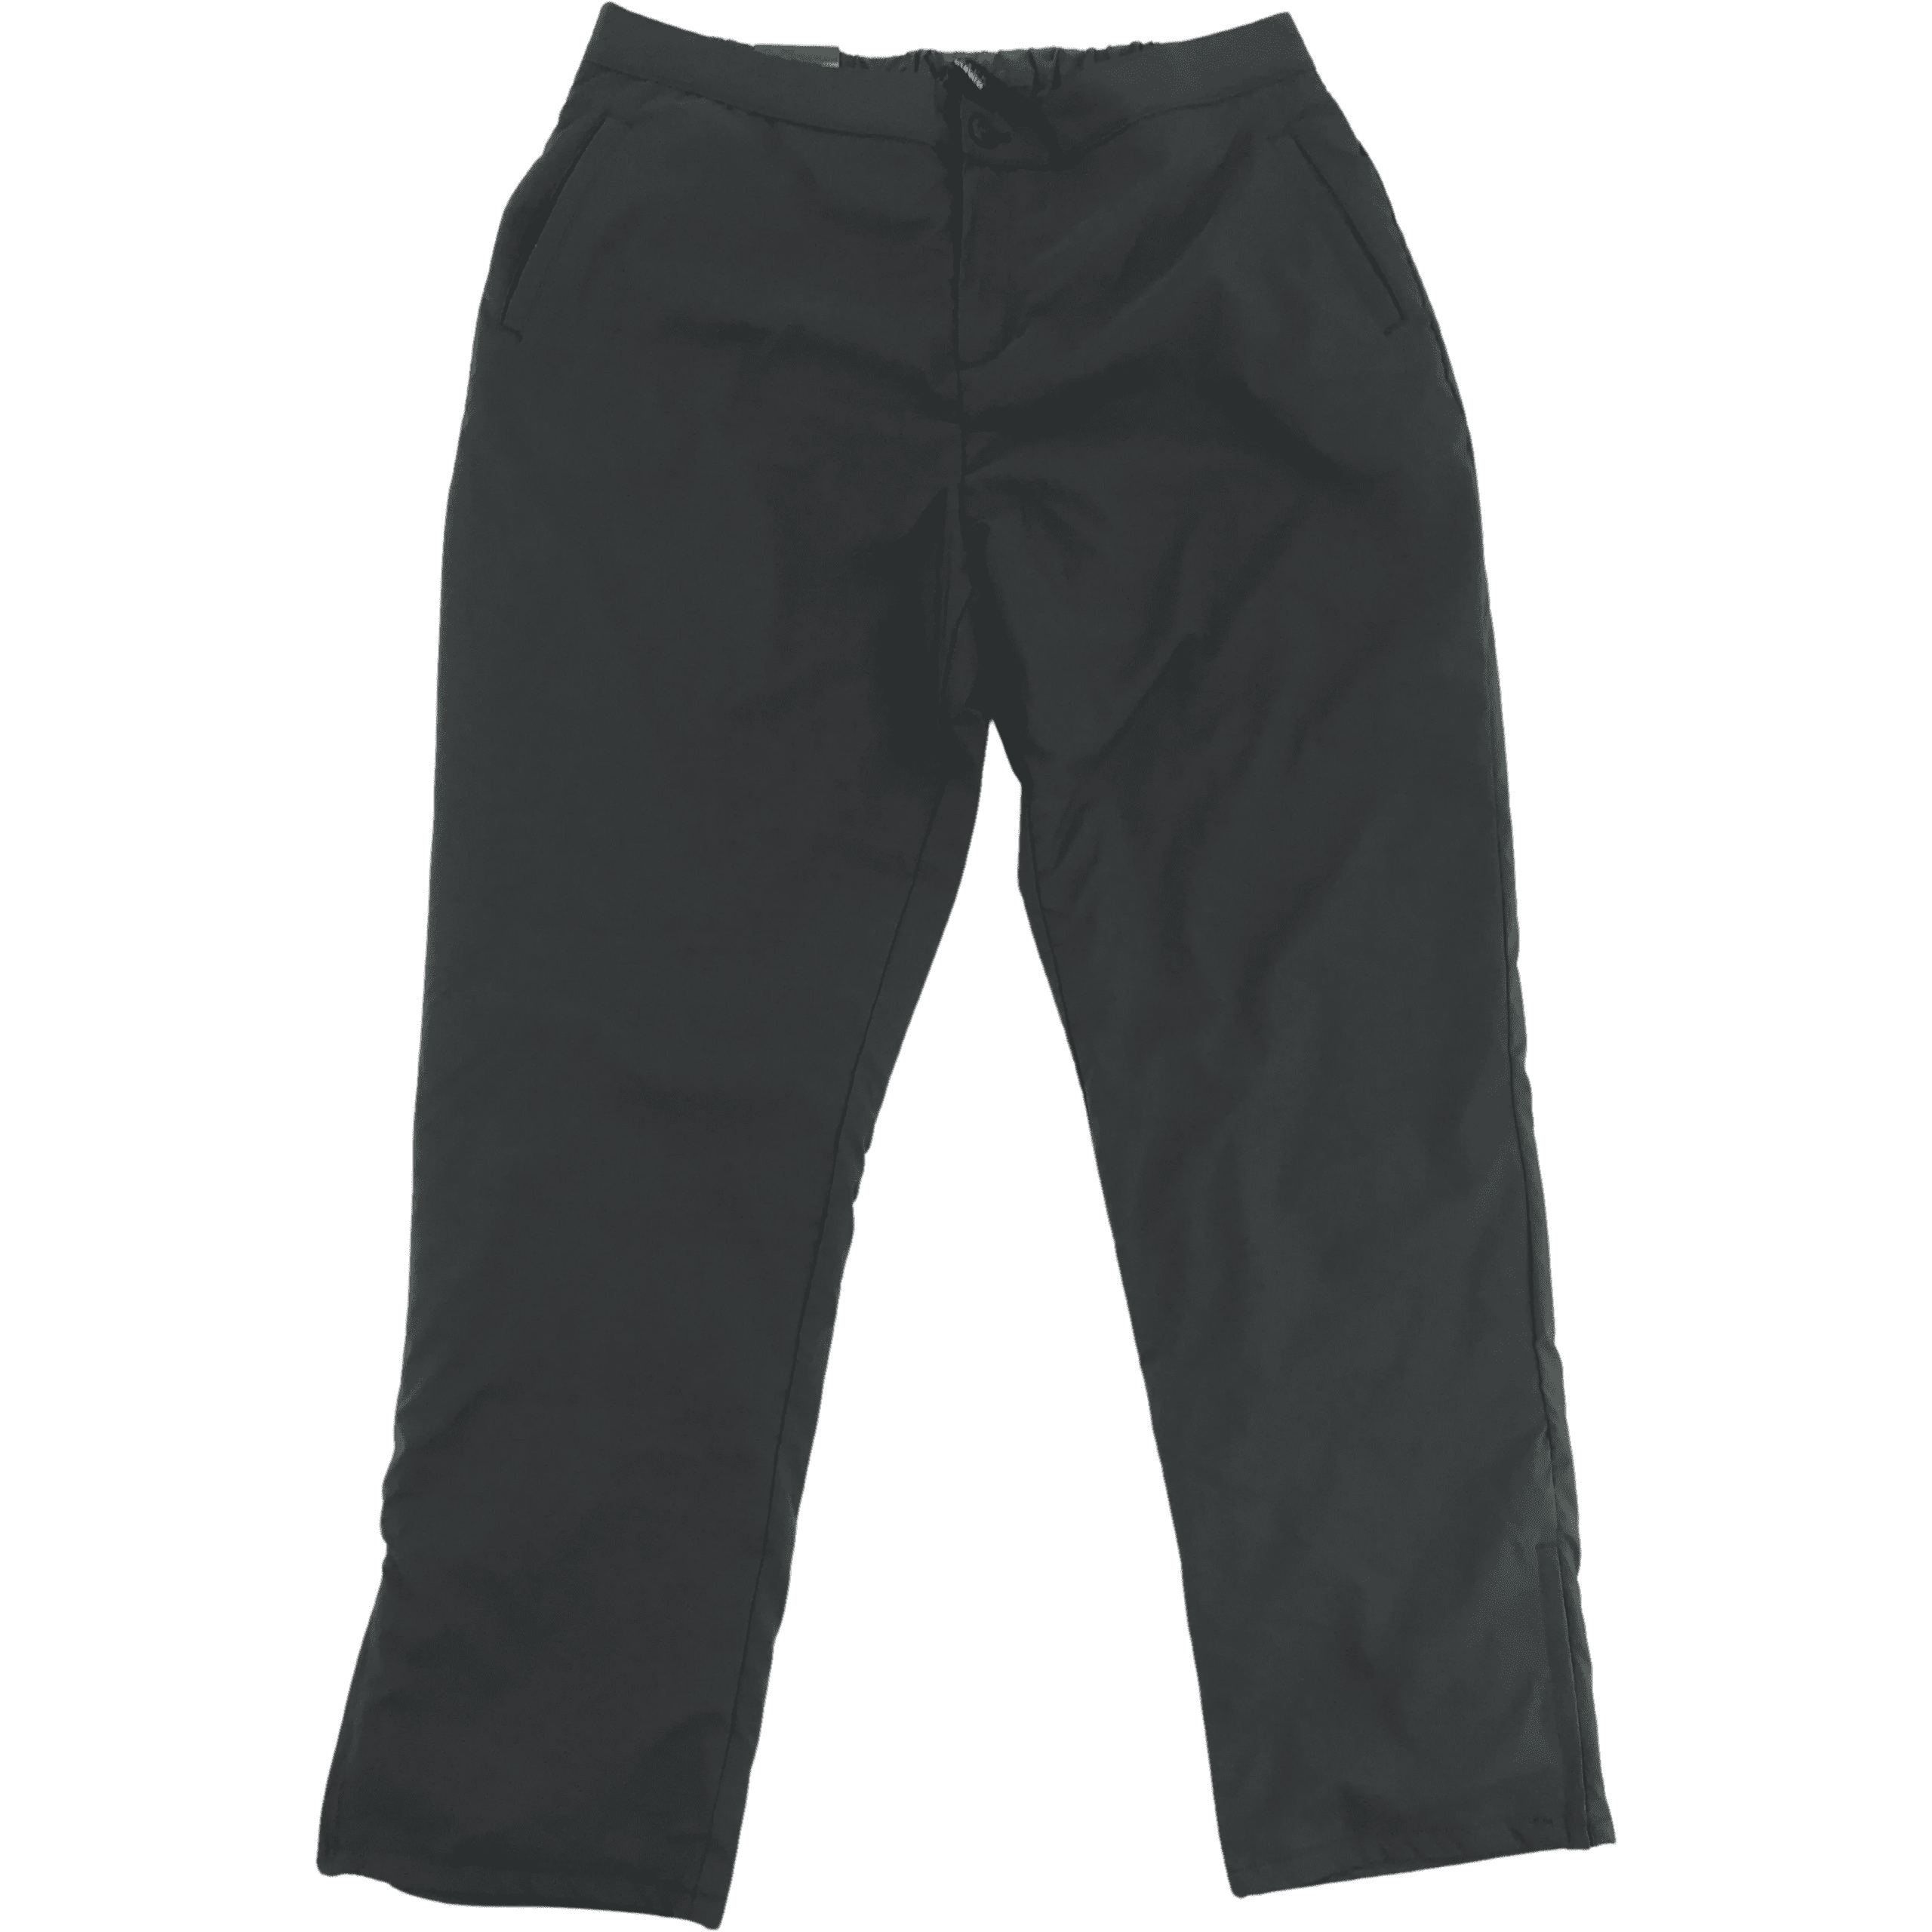 Stormpack Sunice Women’s Dark Grey Lined Pants / Various Sizes ...